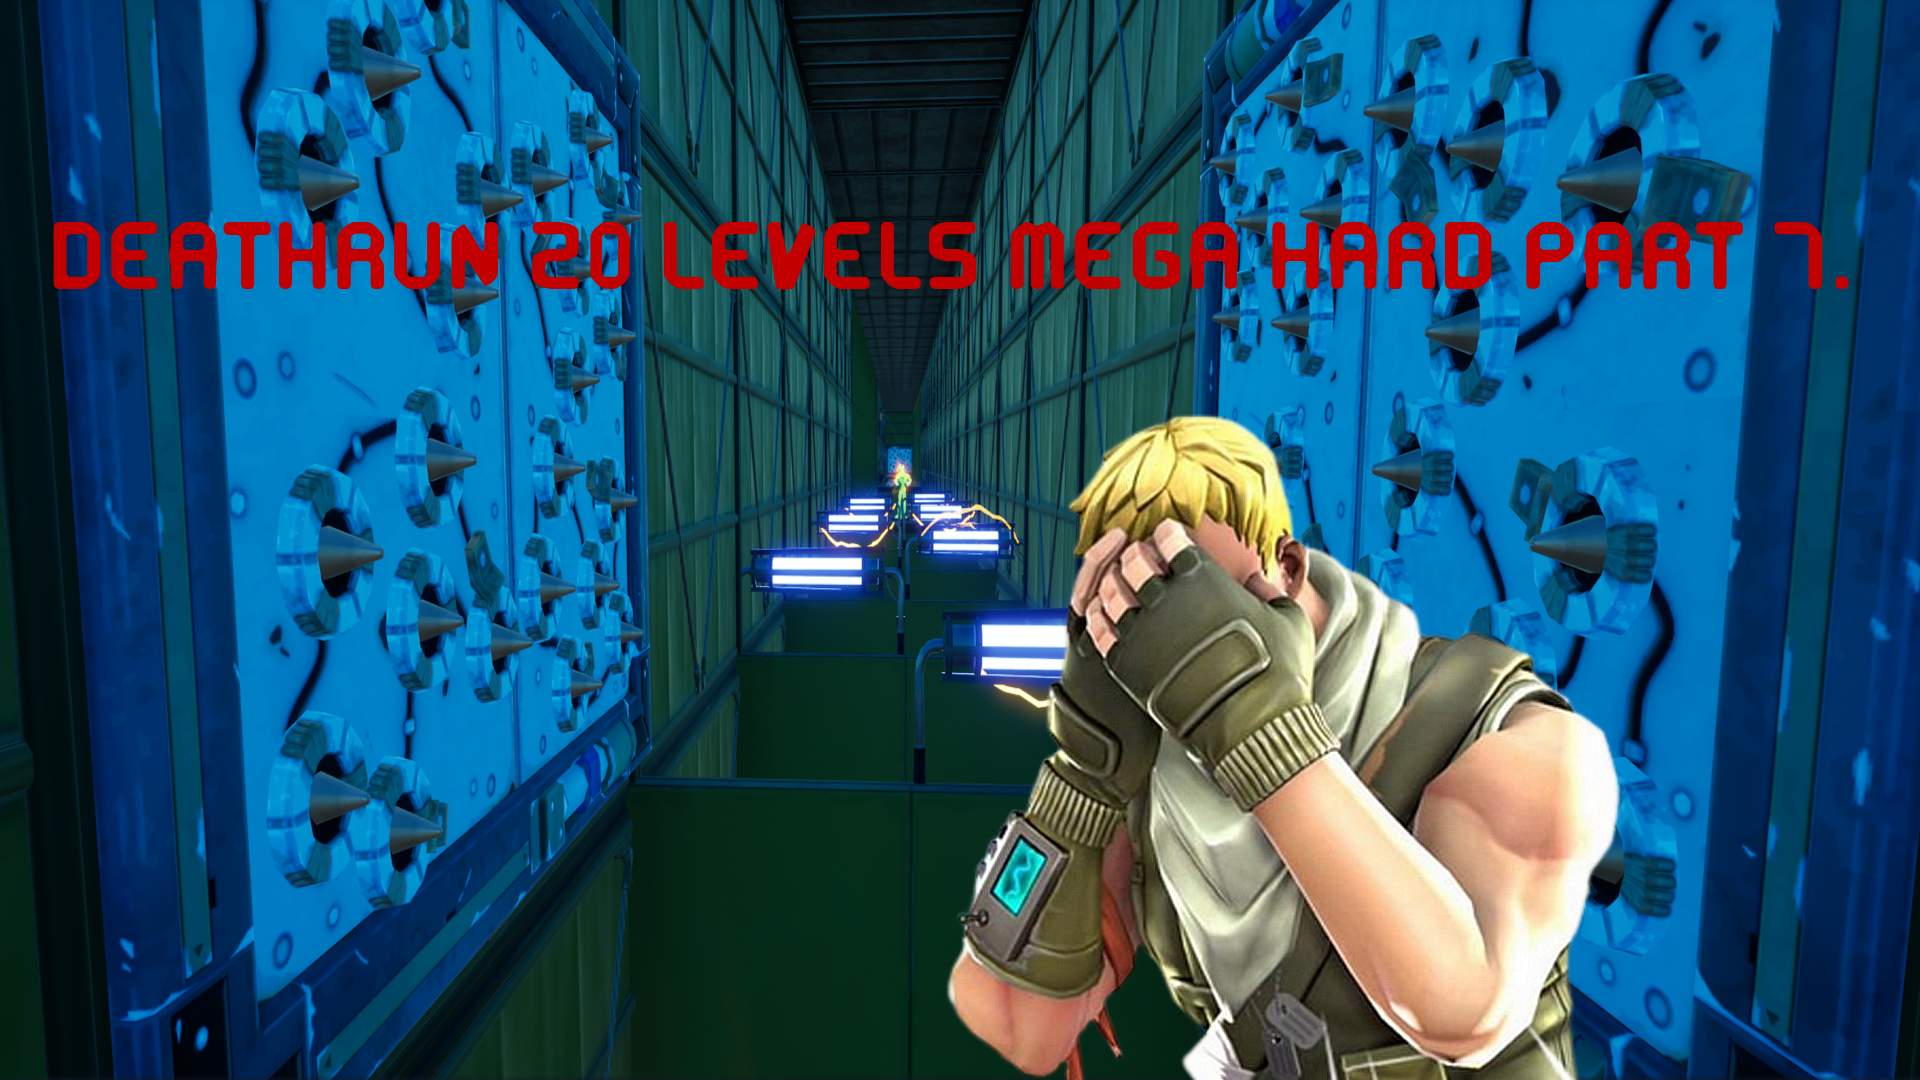 Deathrun 20 levels mega hard part 7.